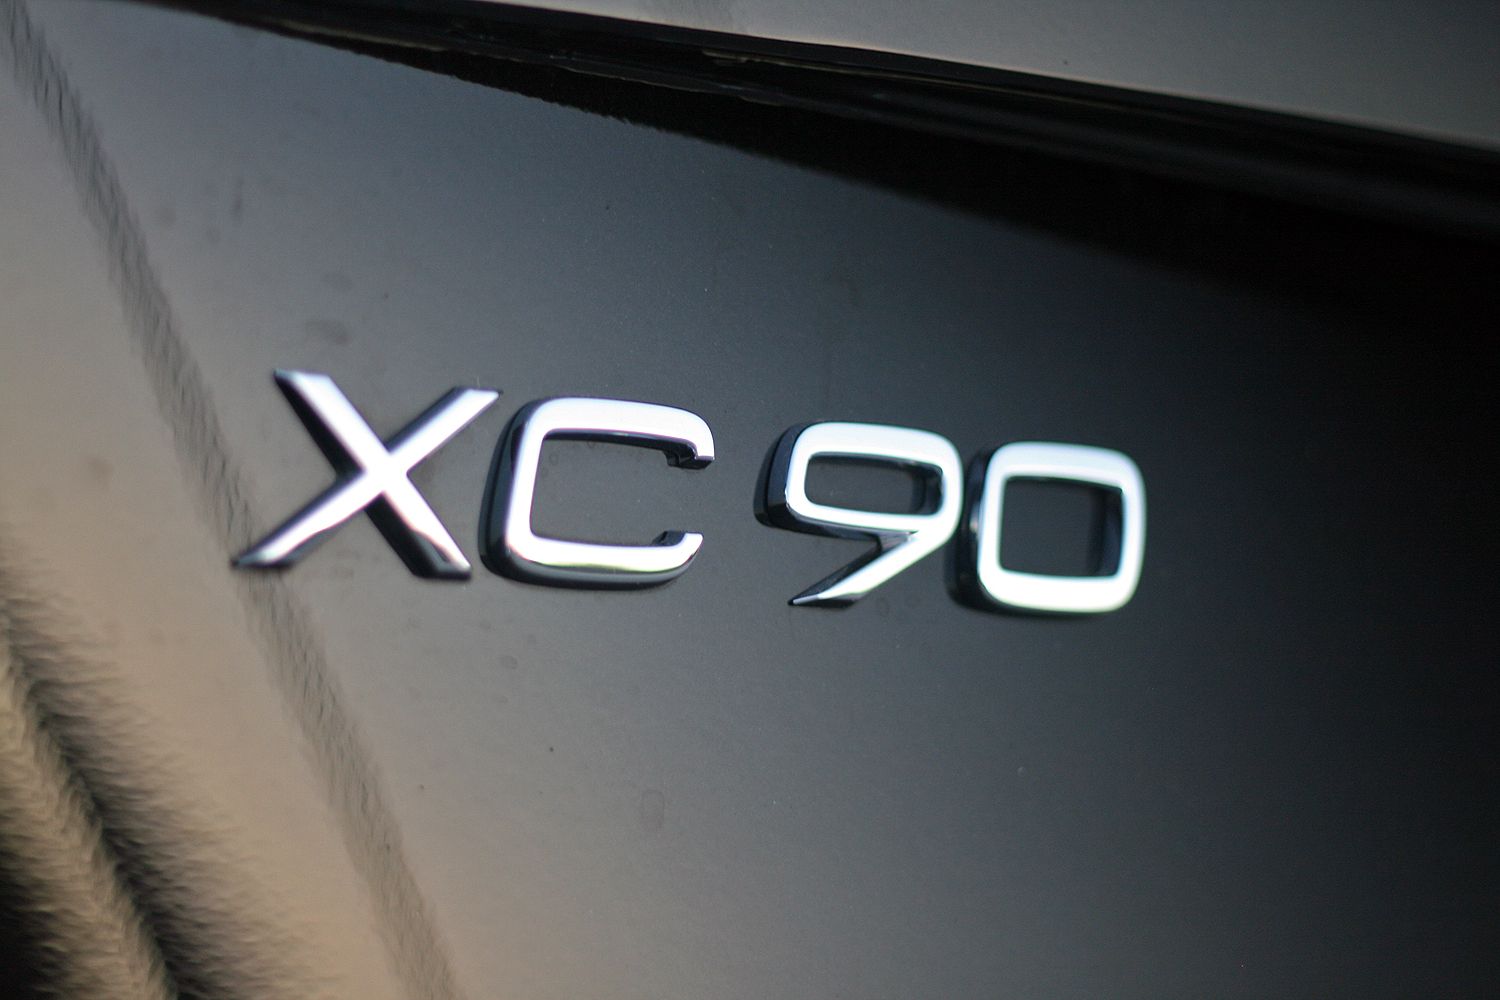 2017 Volvo XC90 T6 AWD Inscription – Driven